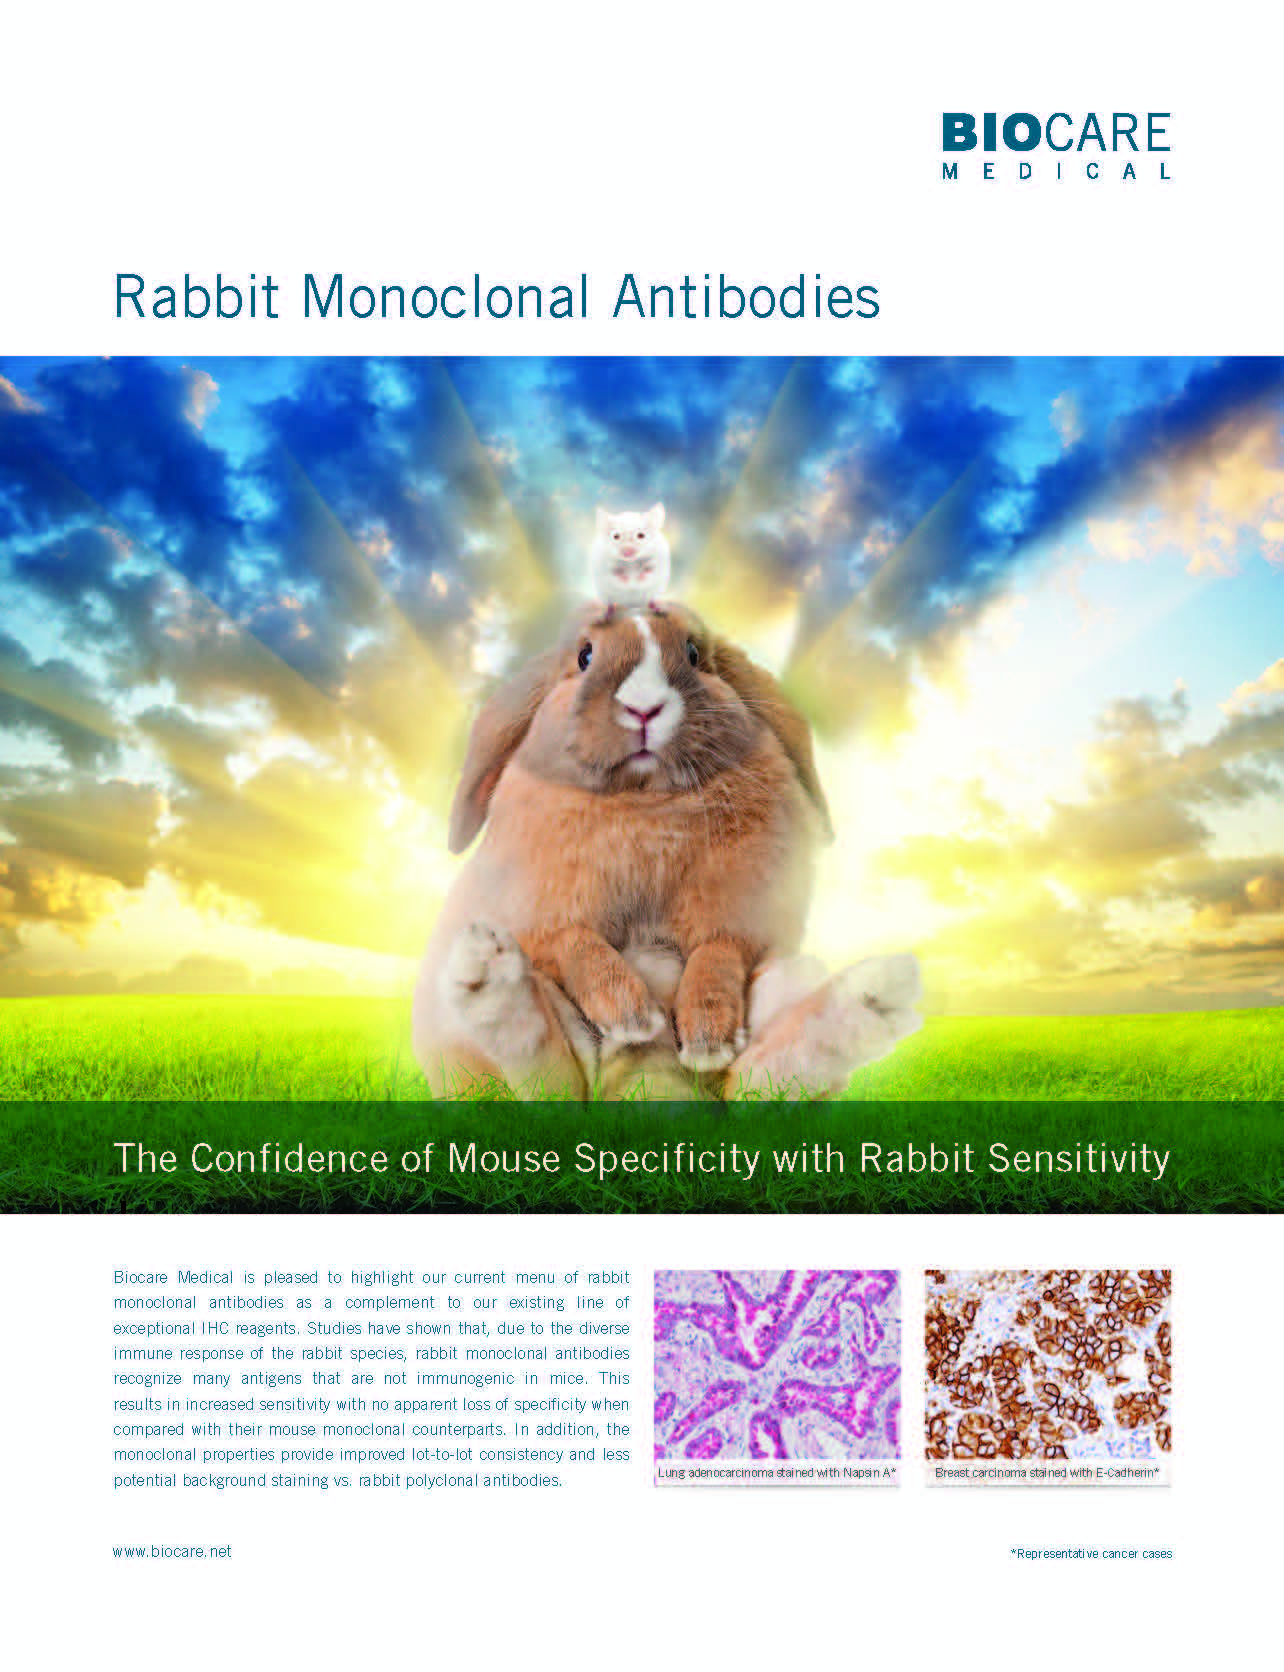 Antibody rabbit monoclonal_Page_1